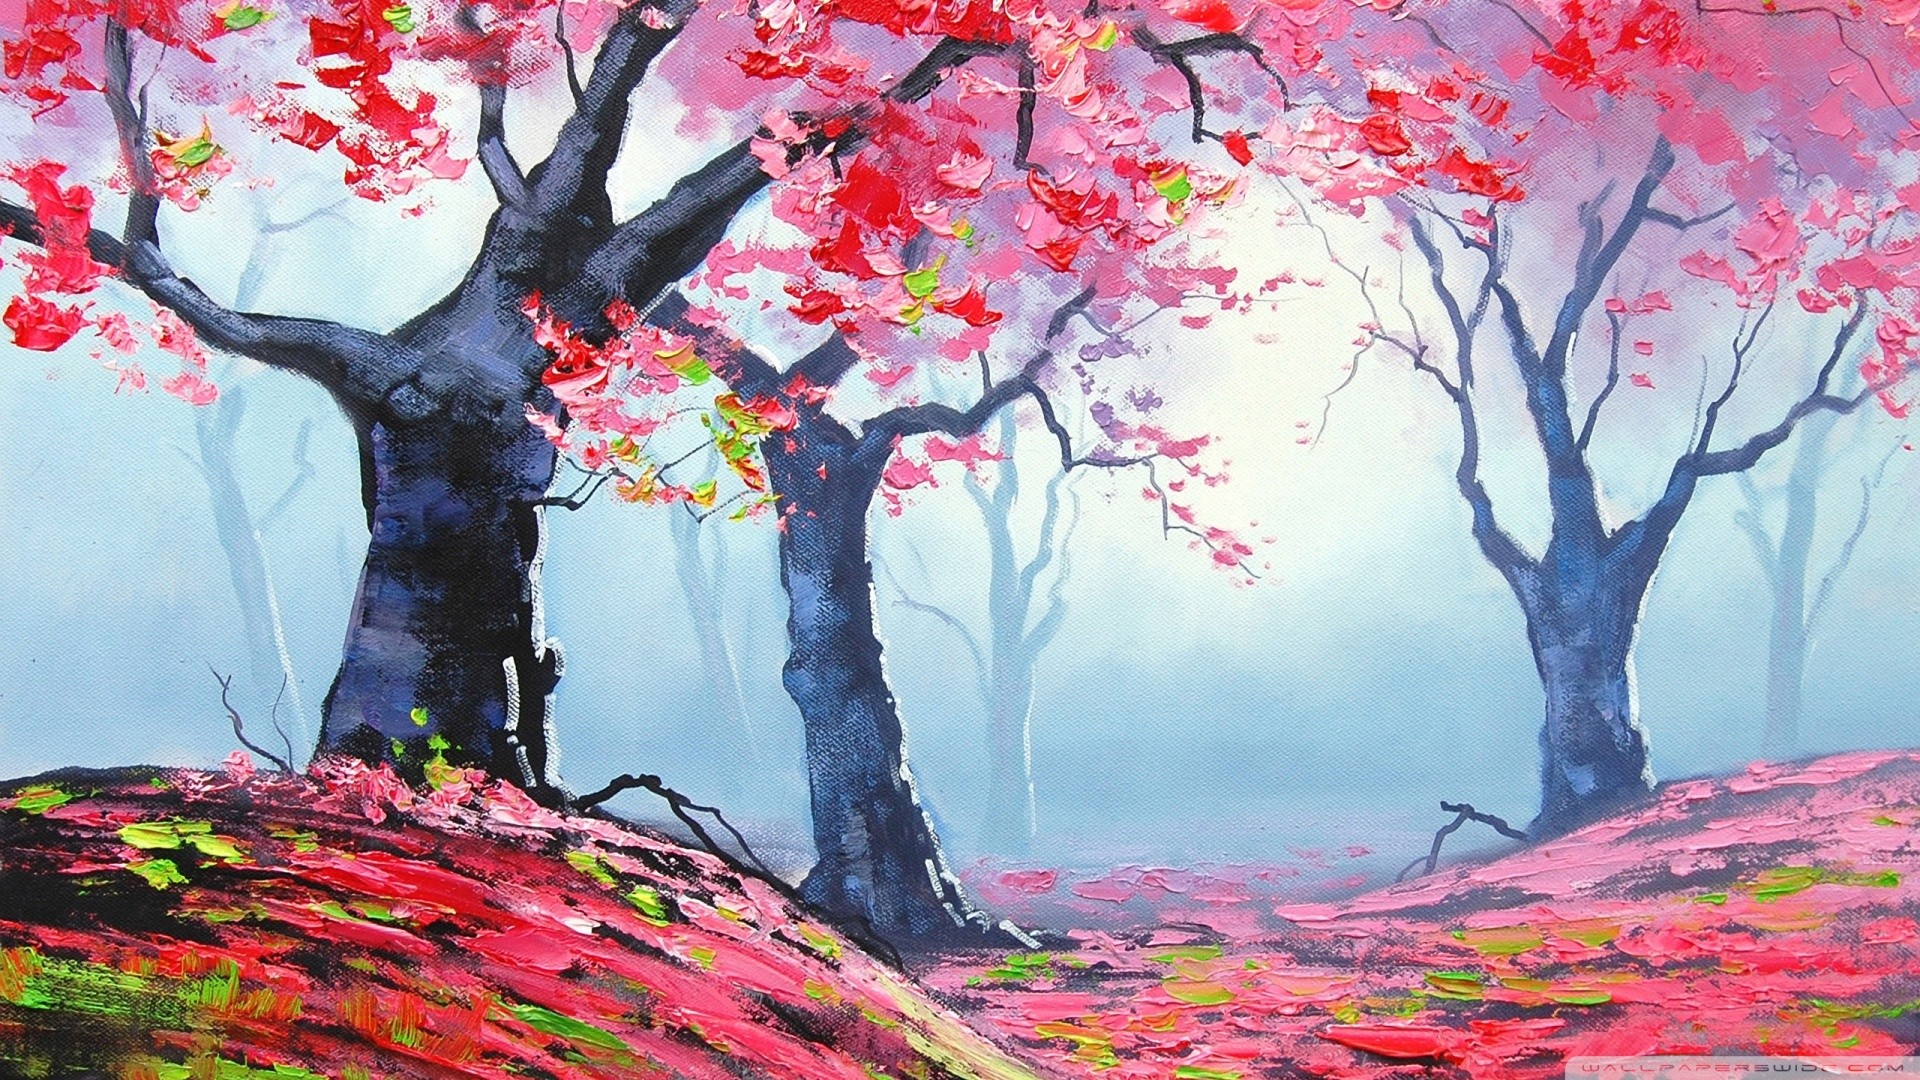 painting, Pink, Forest, Graham Gercken, Fall Wallpaper